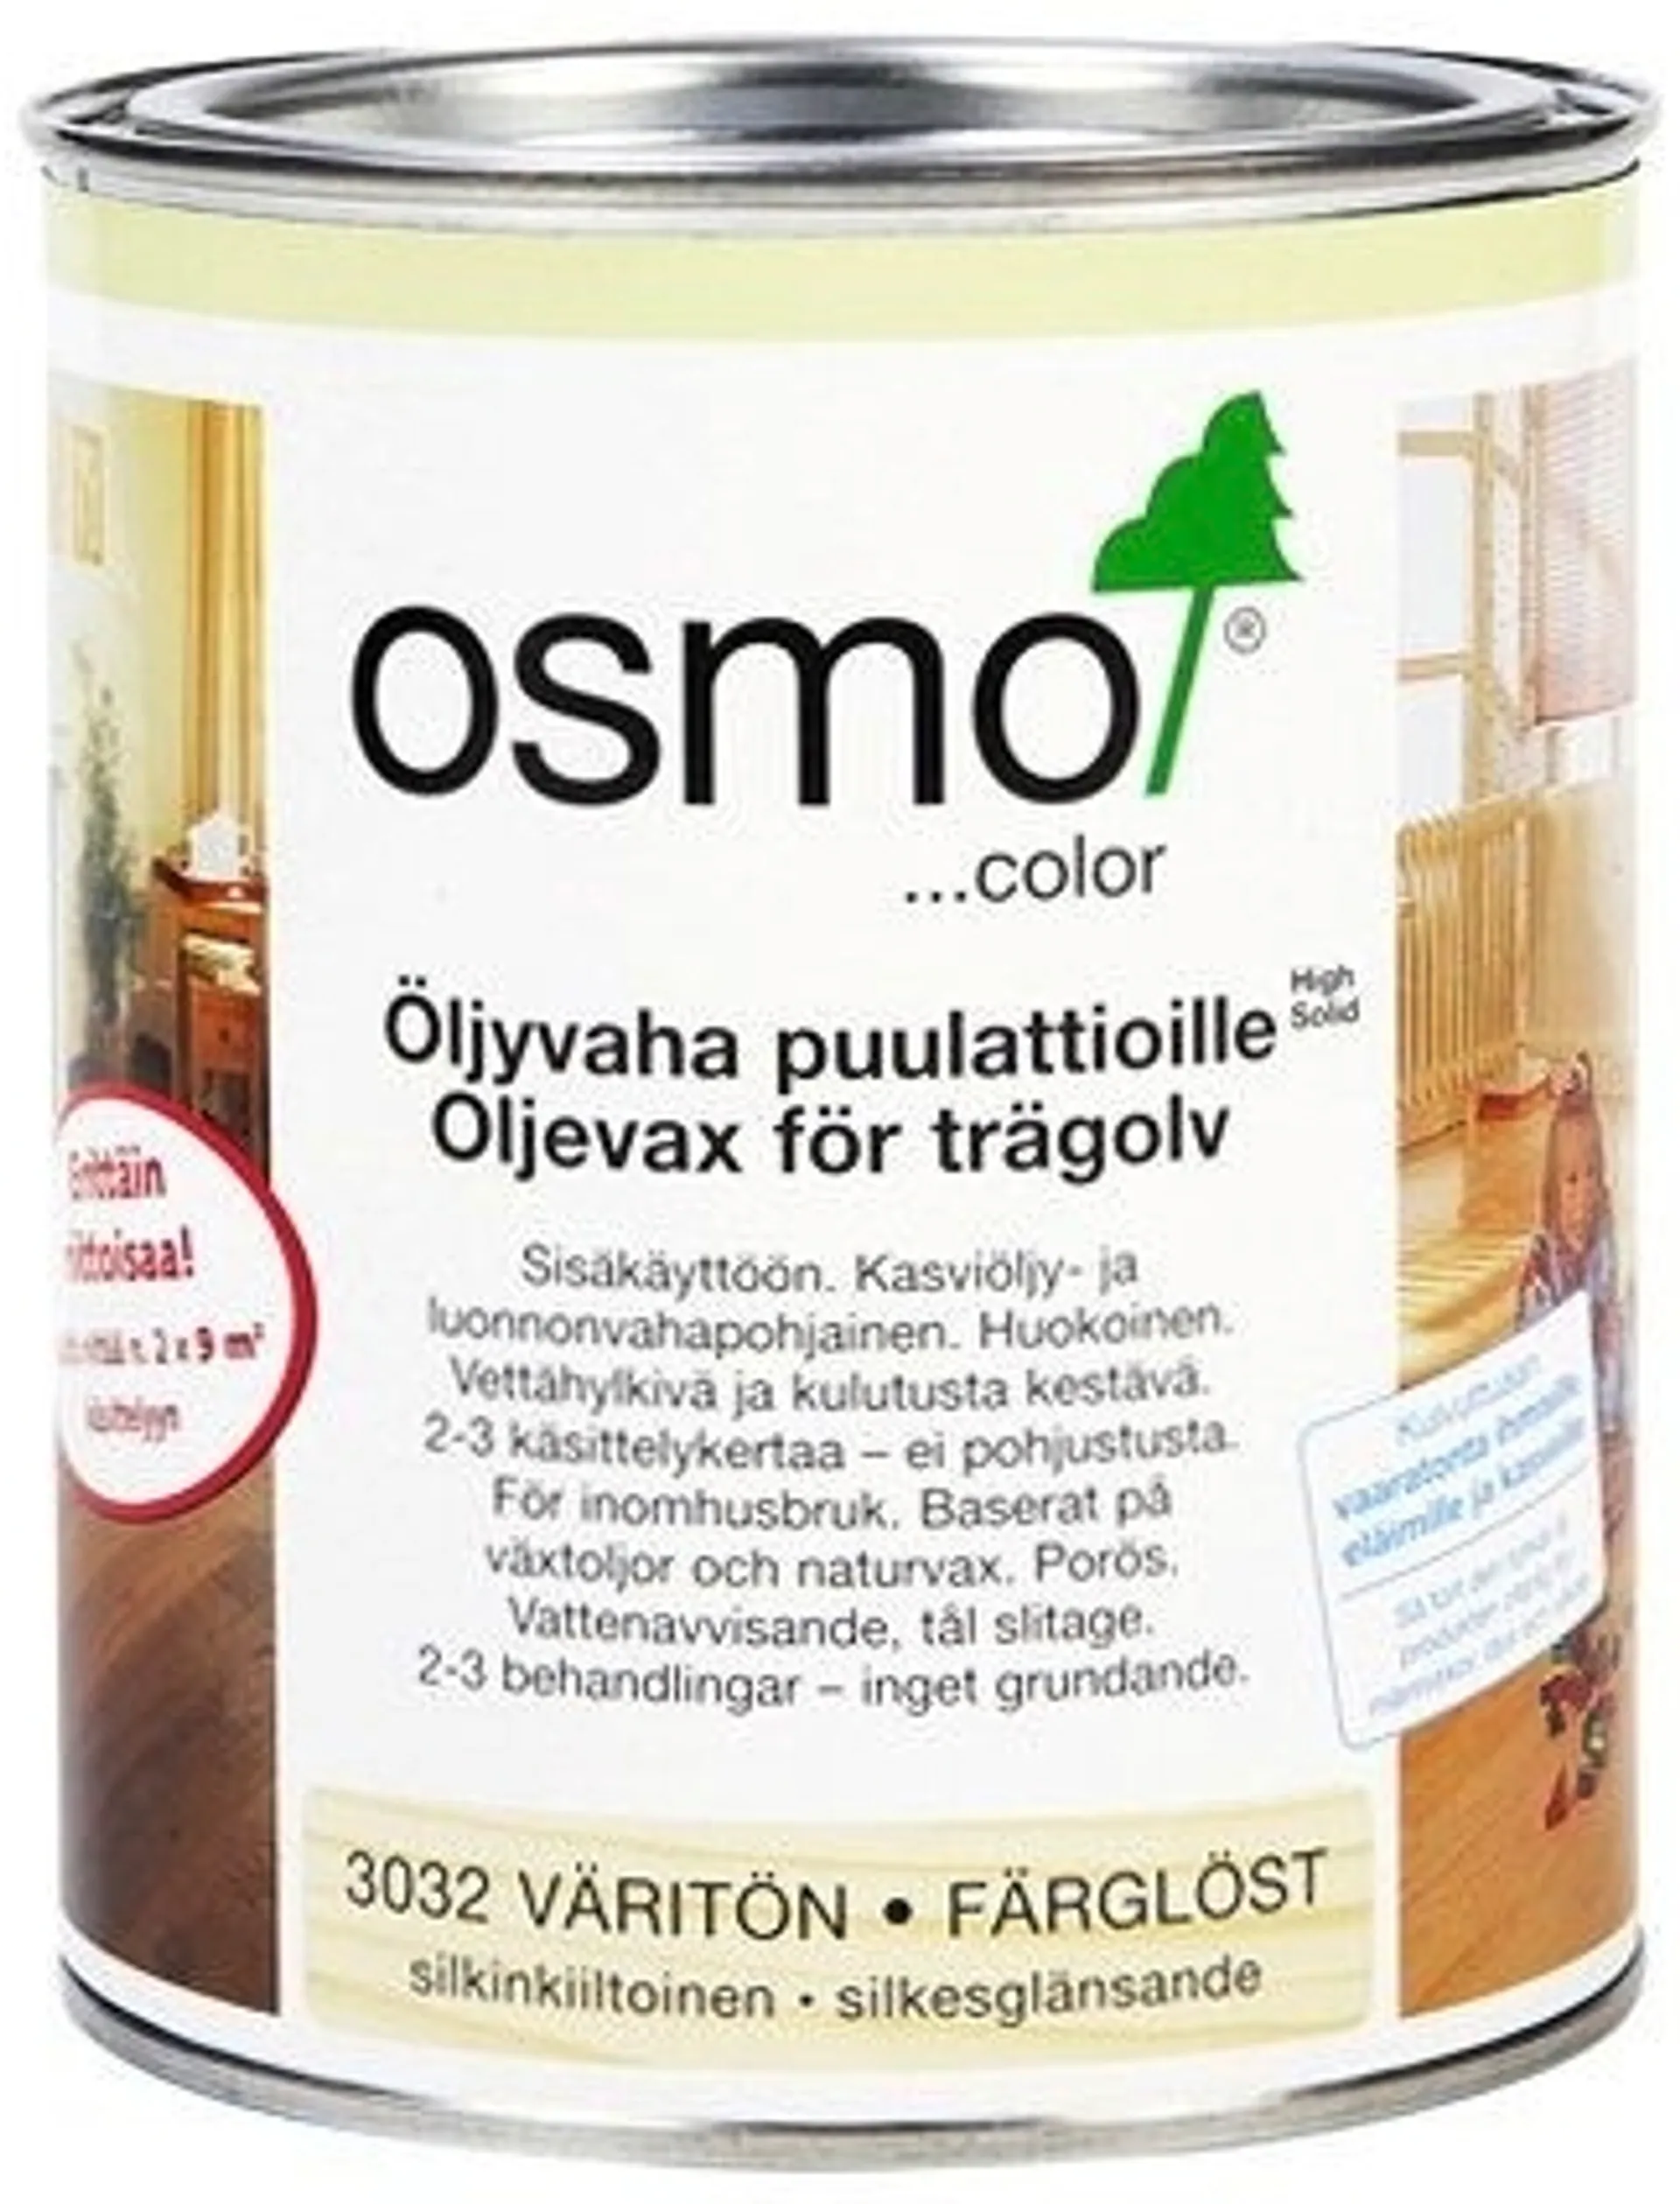 Osmo Color 750ml öljyvaha 3032 väritön silkinhimmeä